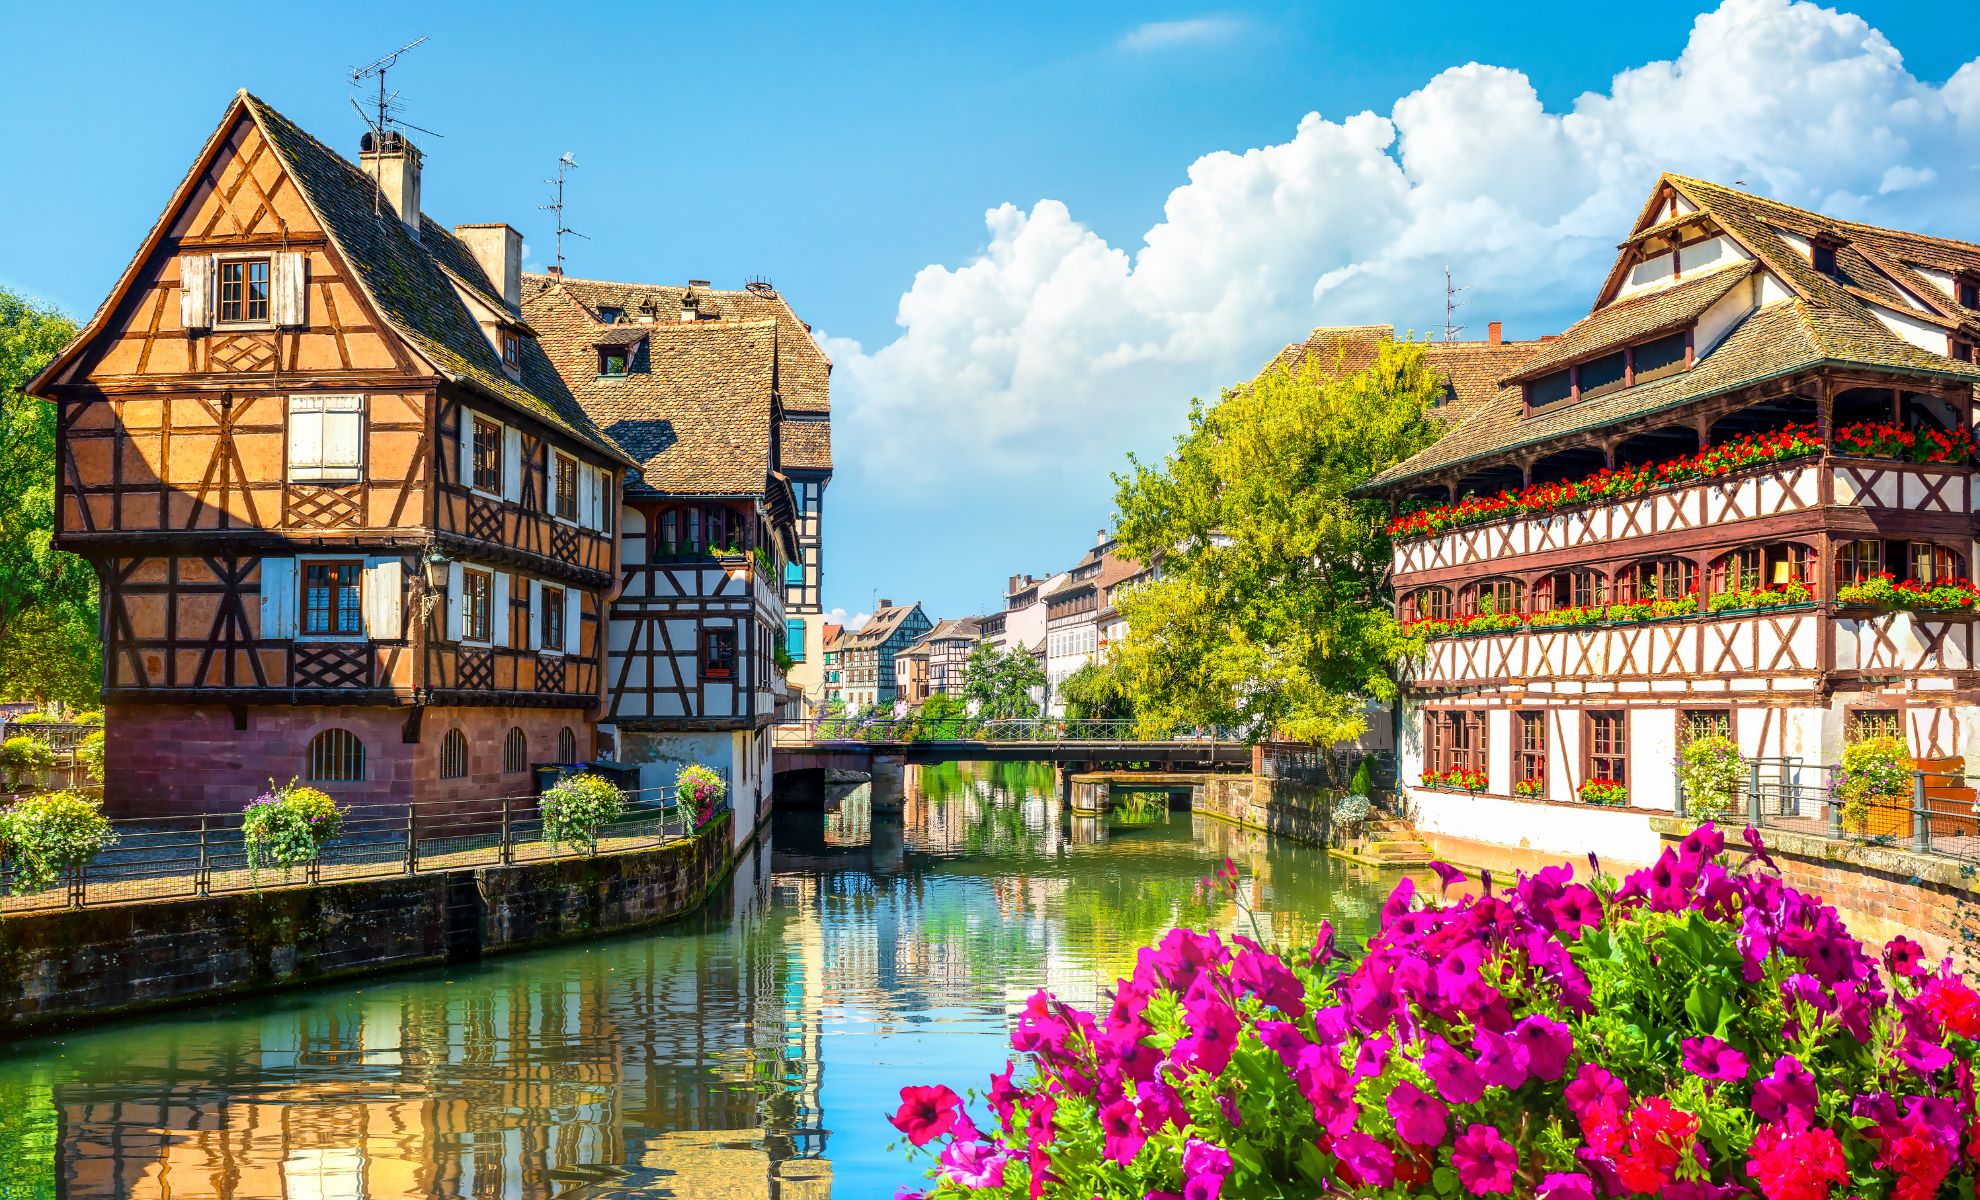 La ville de Strasbourg, France